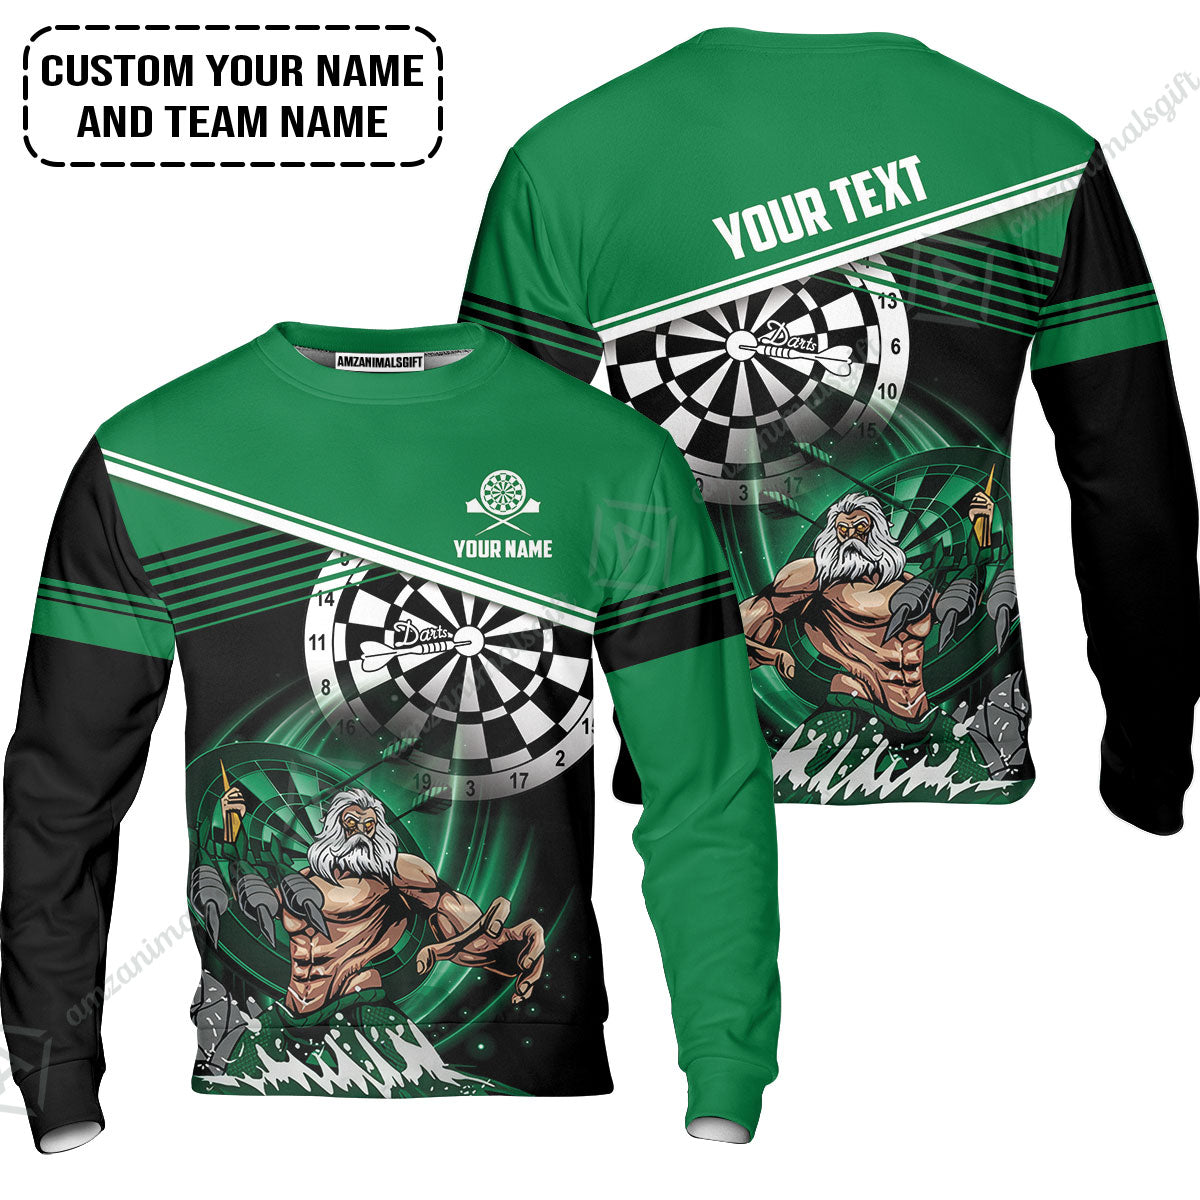 Customized Name & Text Darts Sweatshirt, Personalized Name Poseidon Darts Sweatshirt